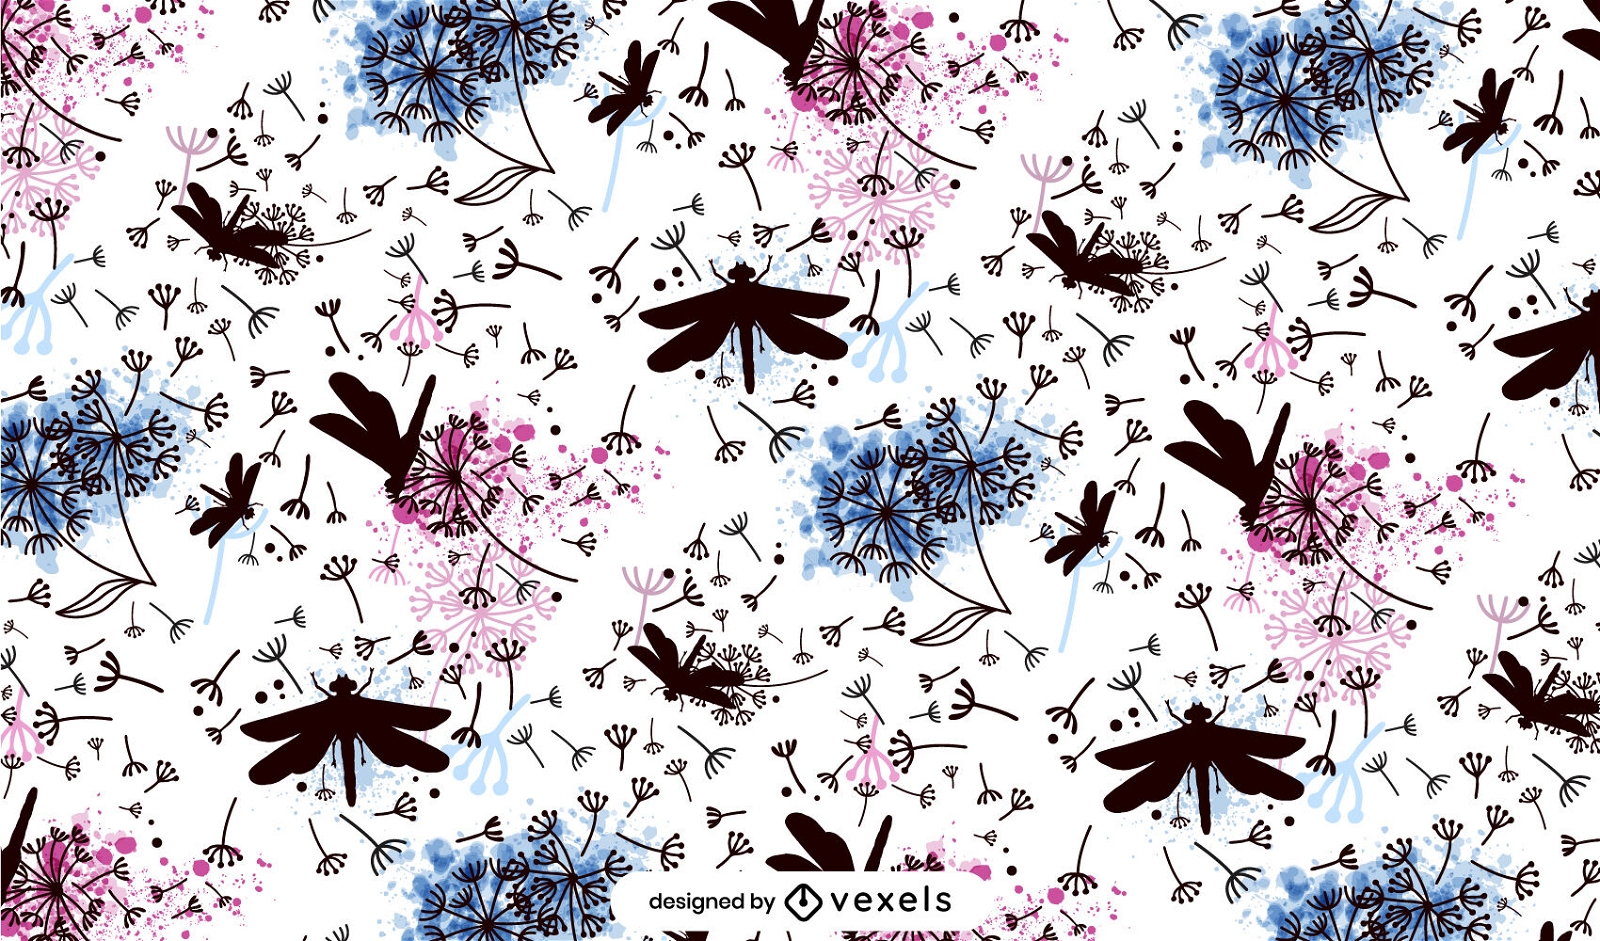 Dragonflies and dandelions pattern design